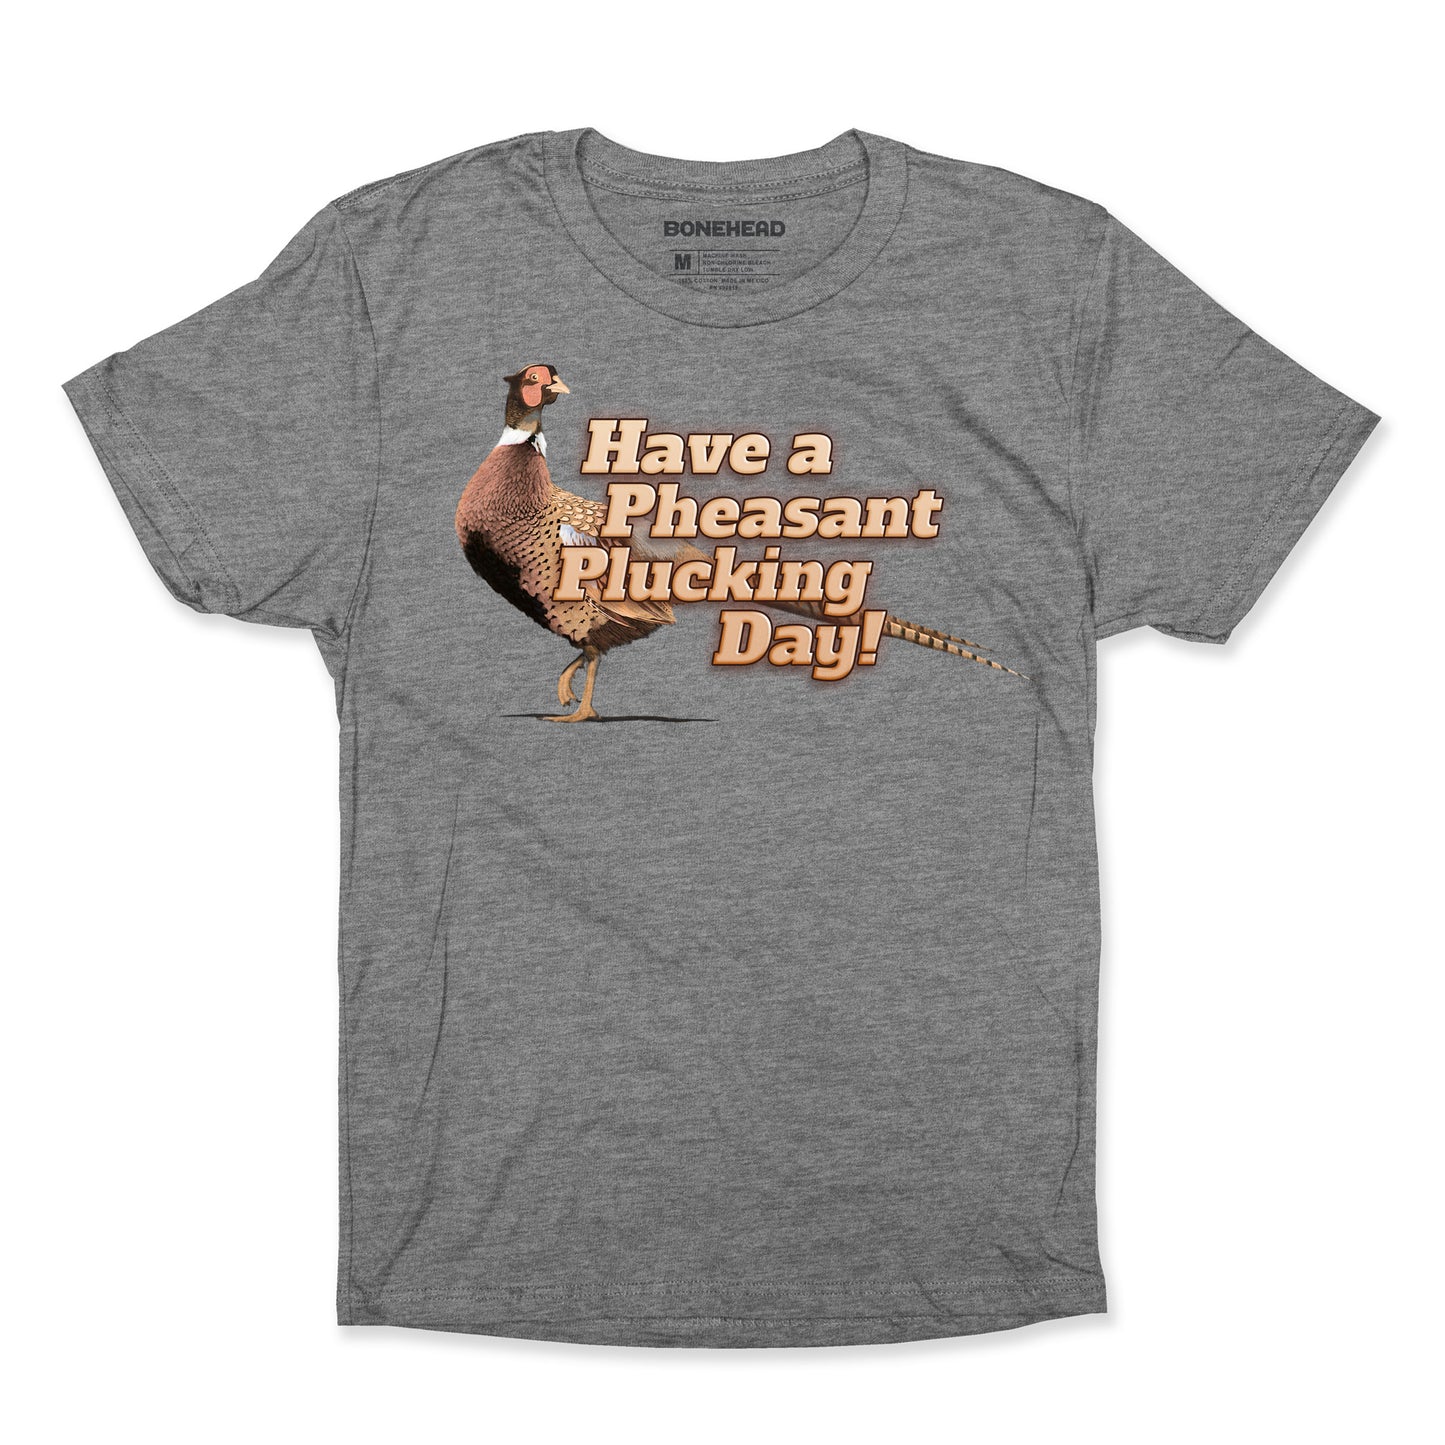 Pheasant Day